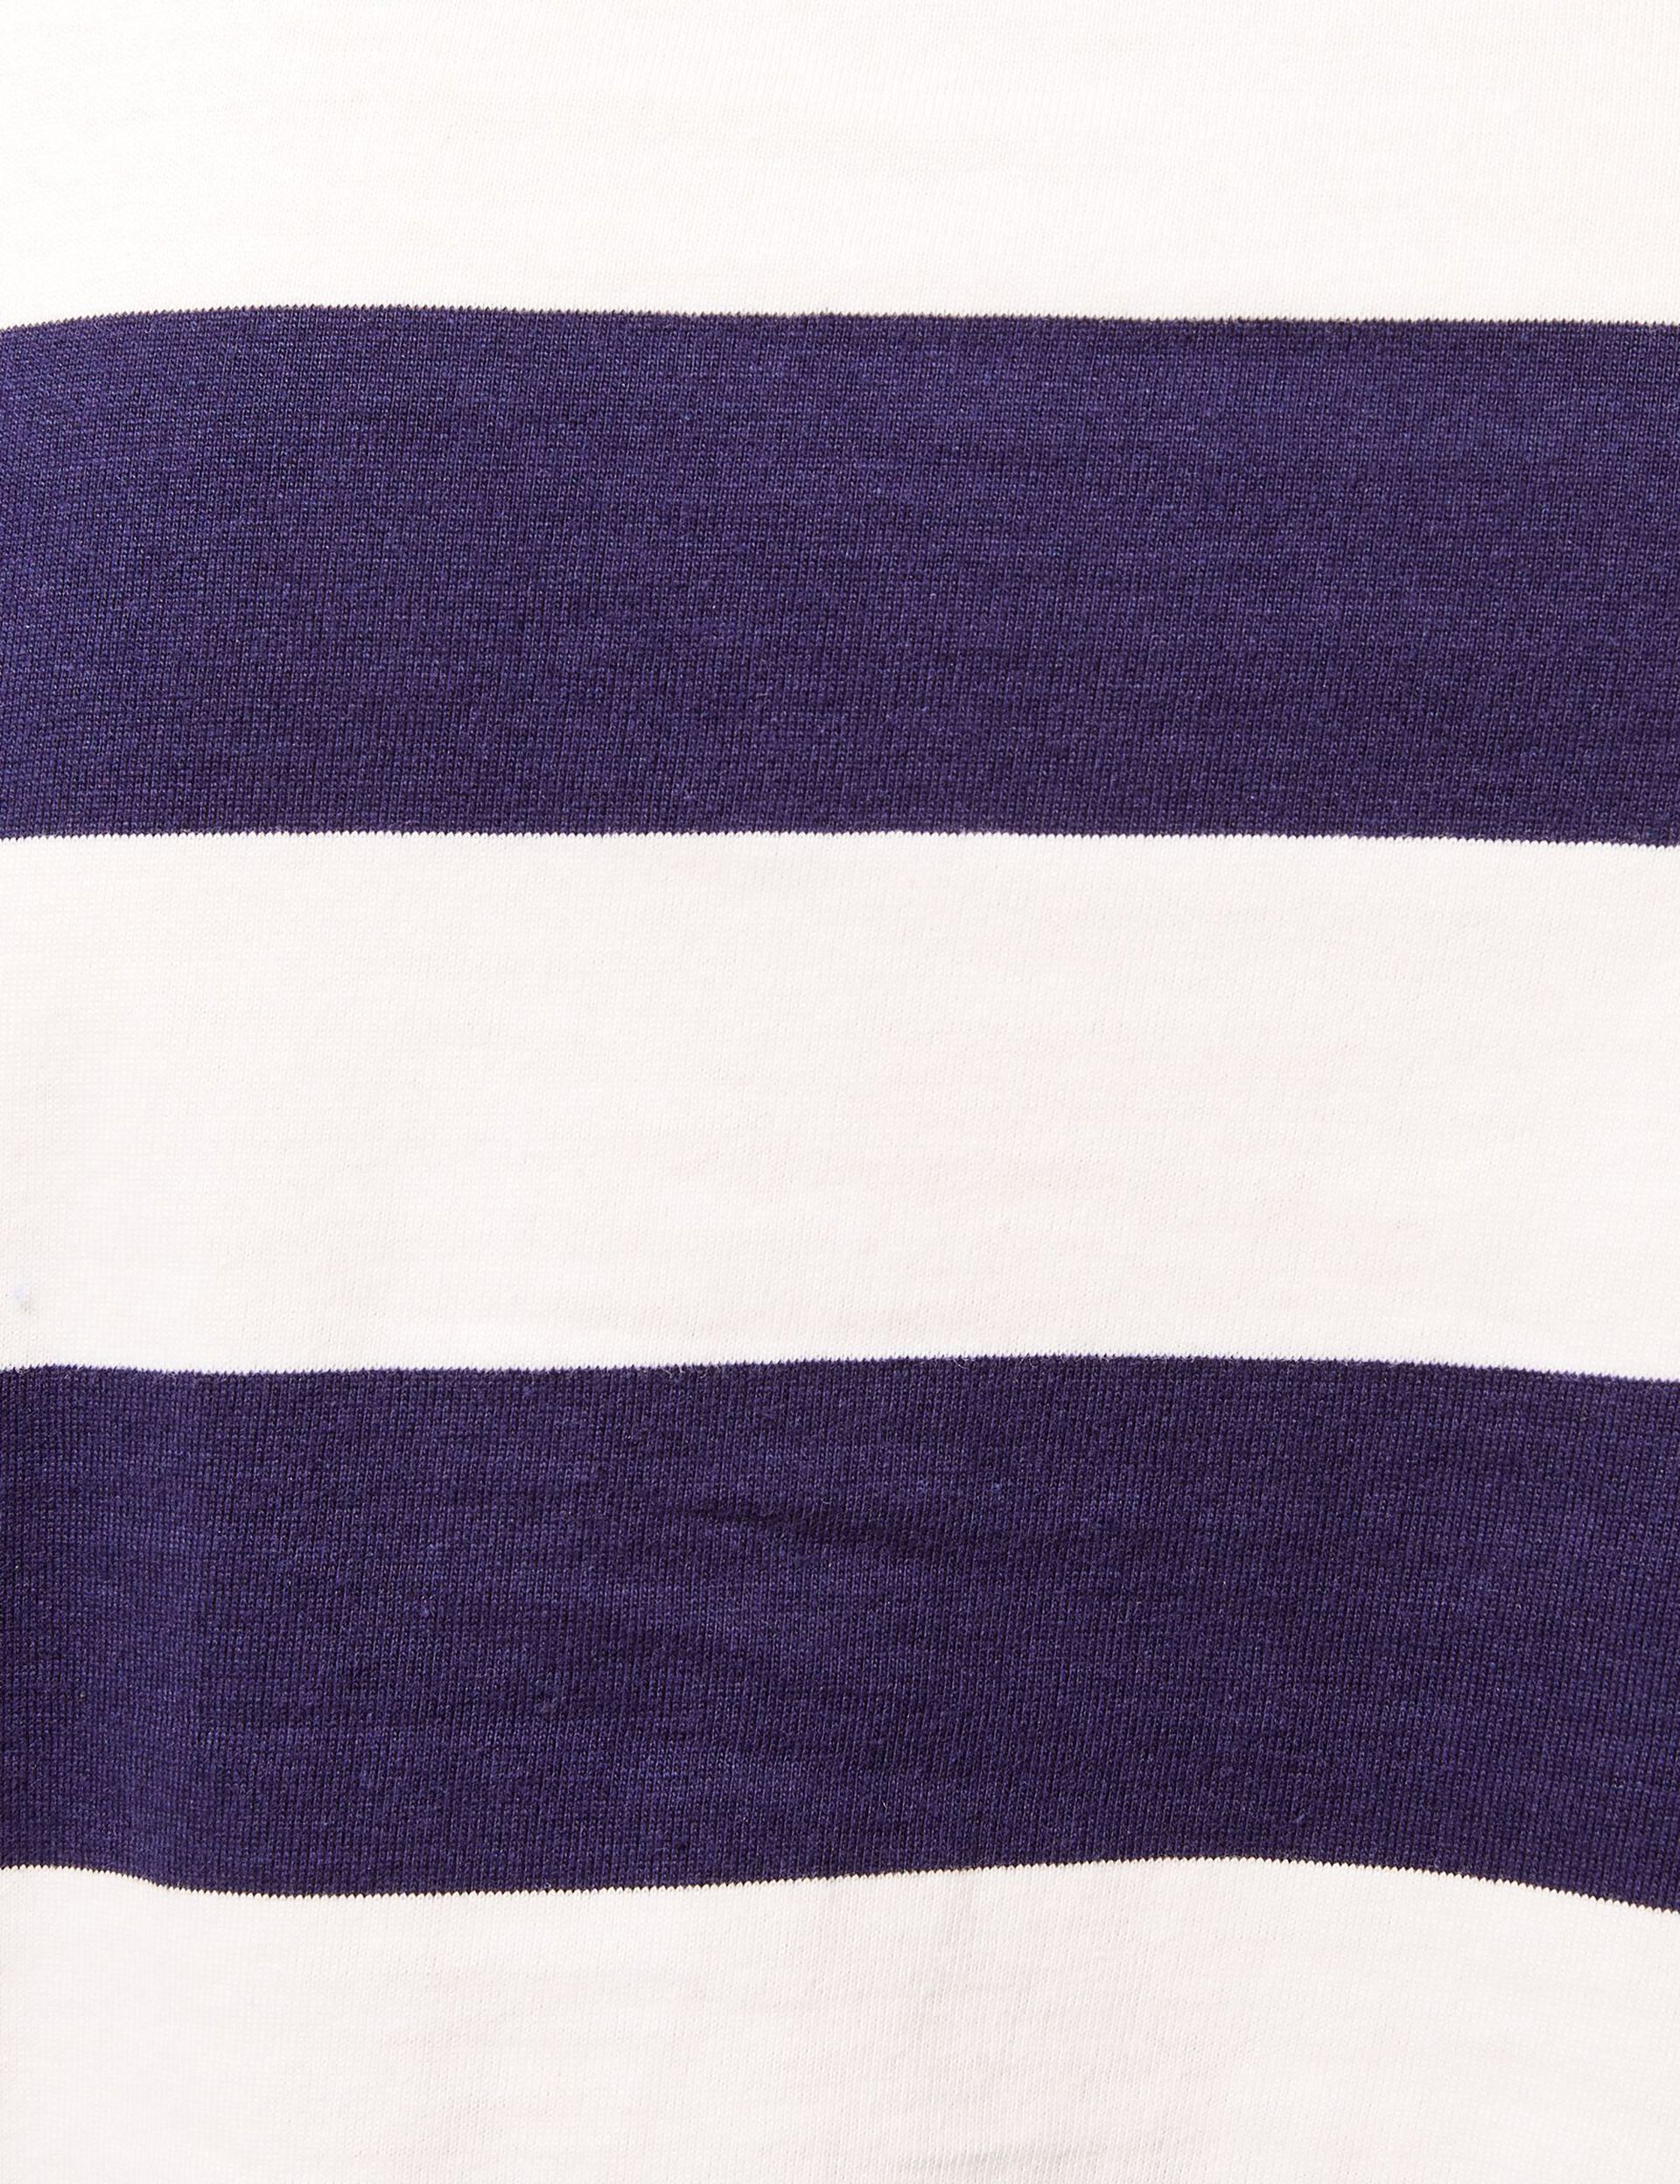 Tee-shirt esprit polo rayé bleu et blanc